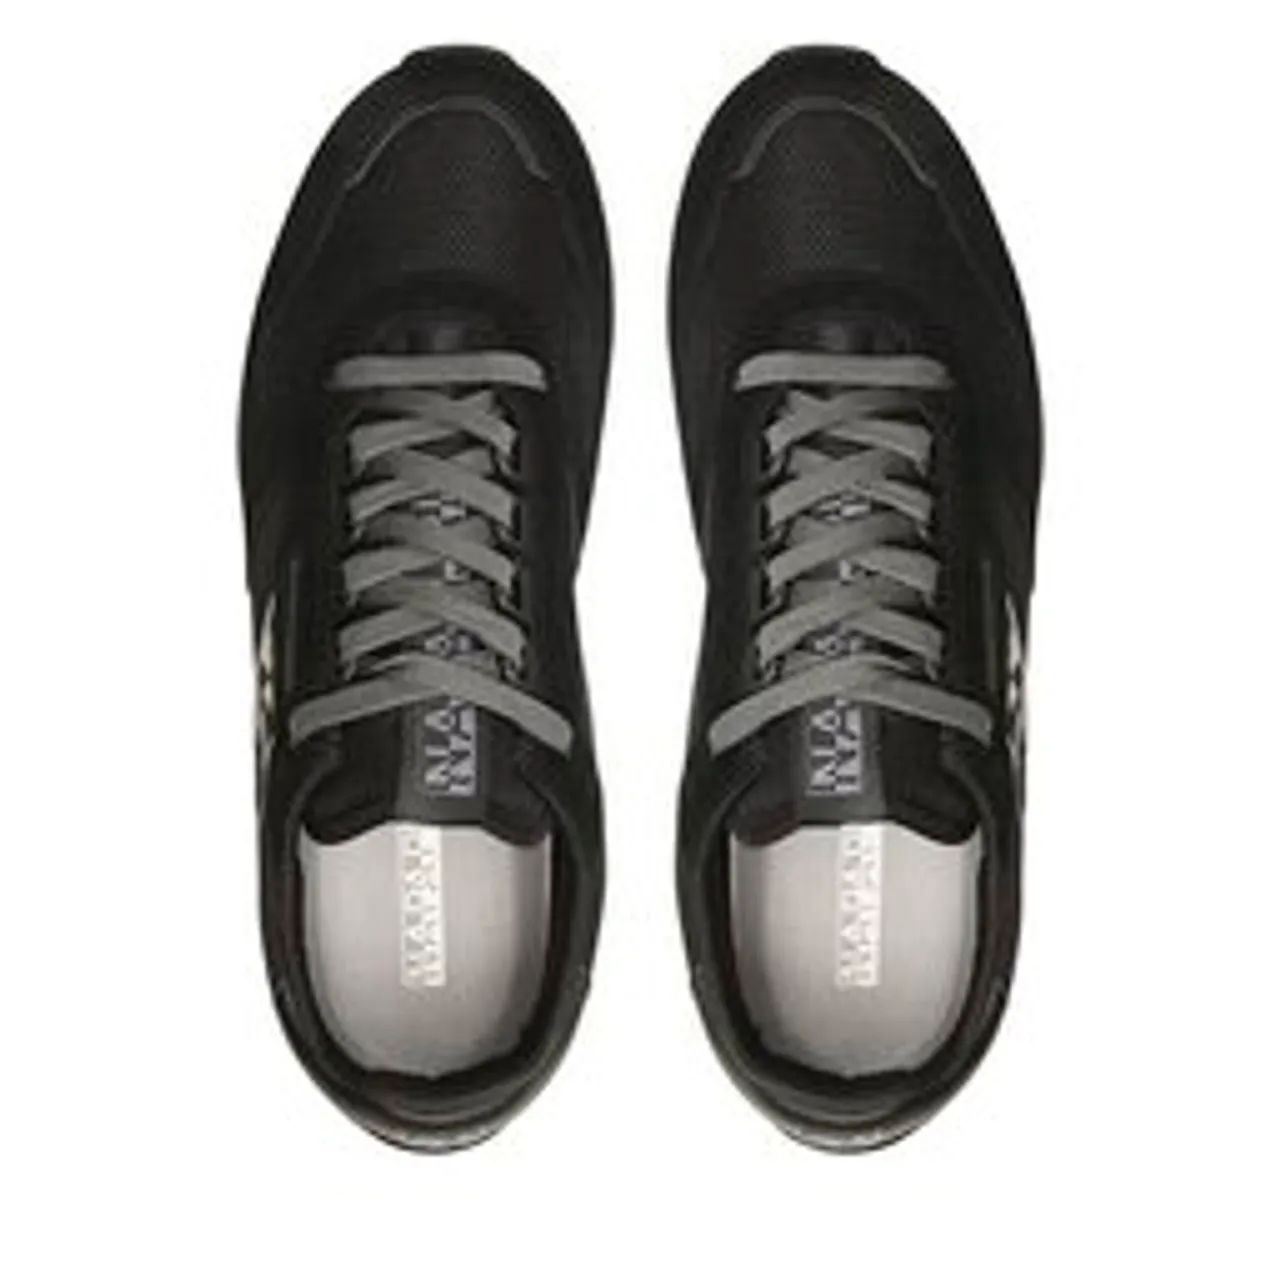 Sneakers Napapijri NP0A4HL8 Black 041